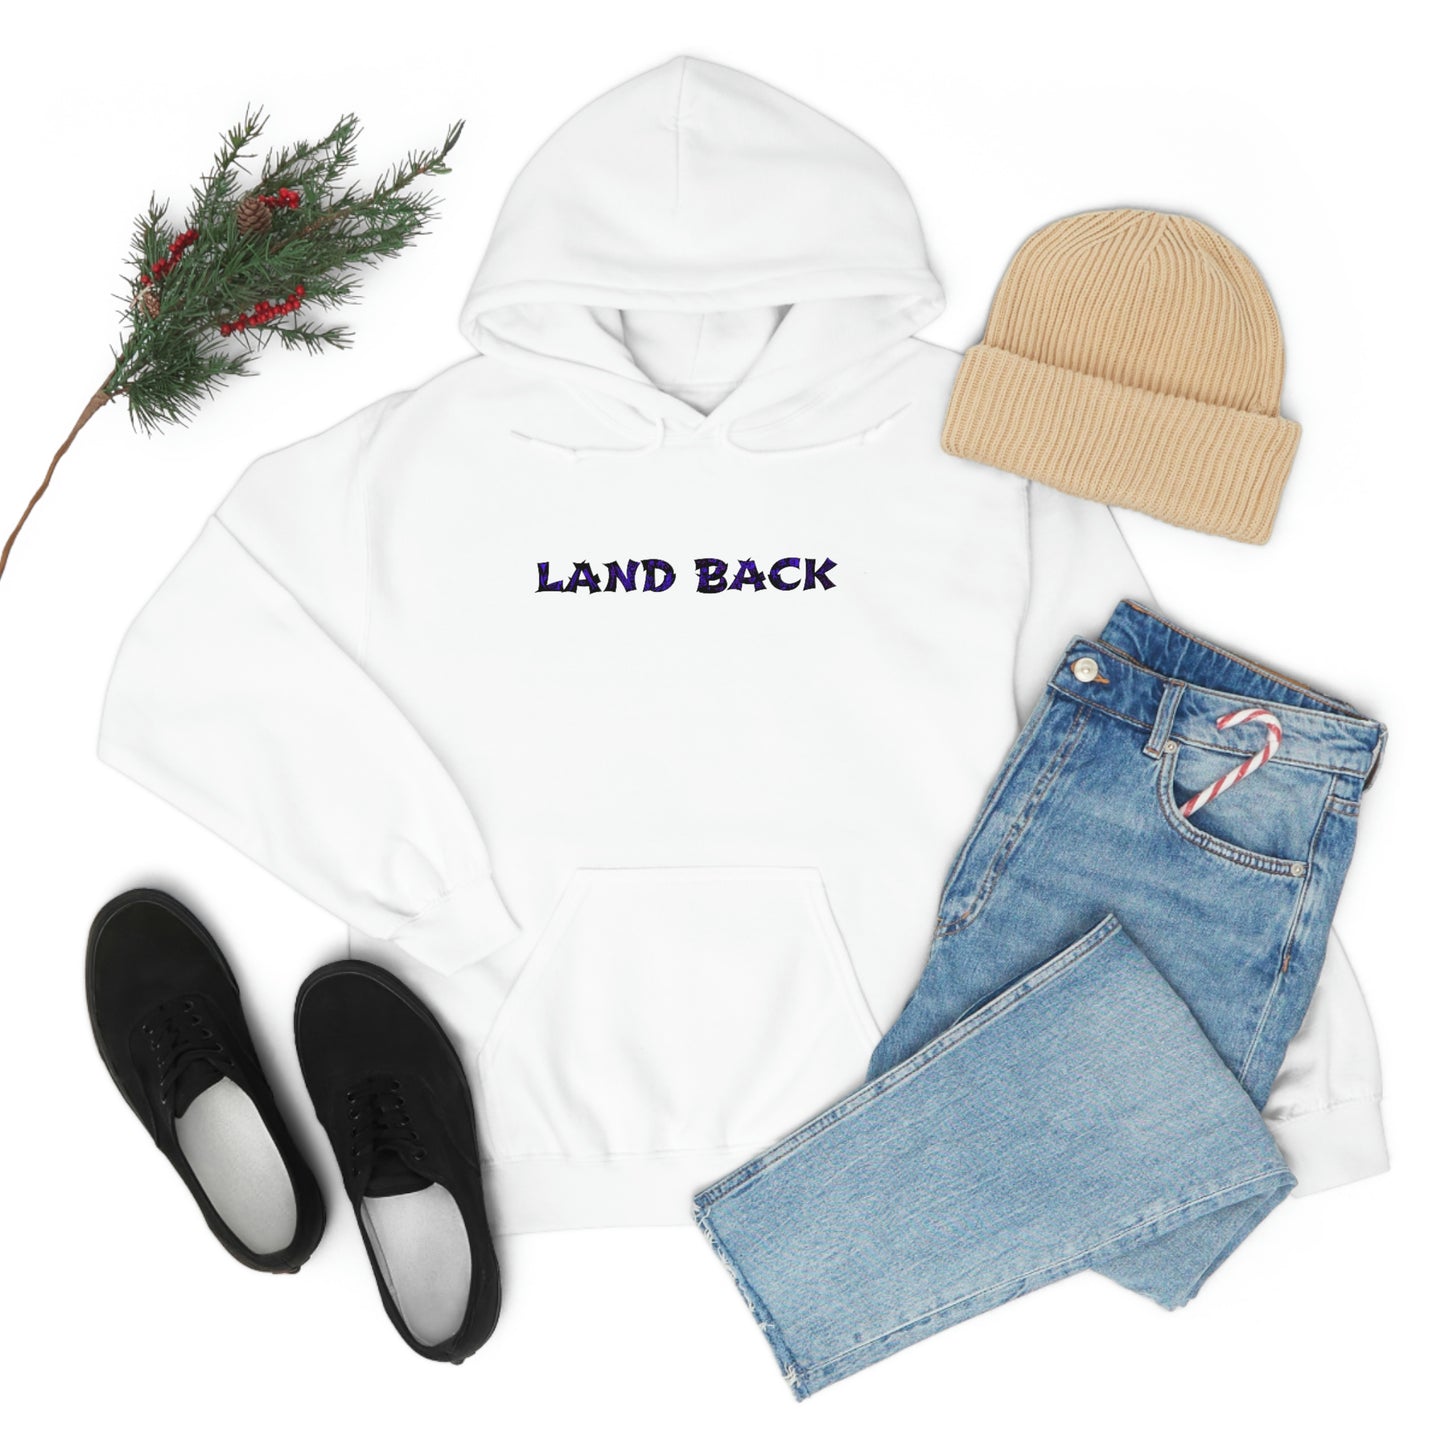 Limited Edition Land Back ™ Hooded Sweatshirt